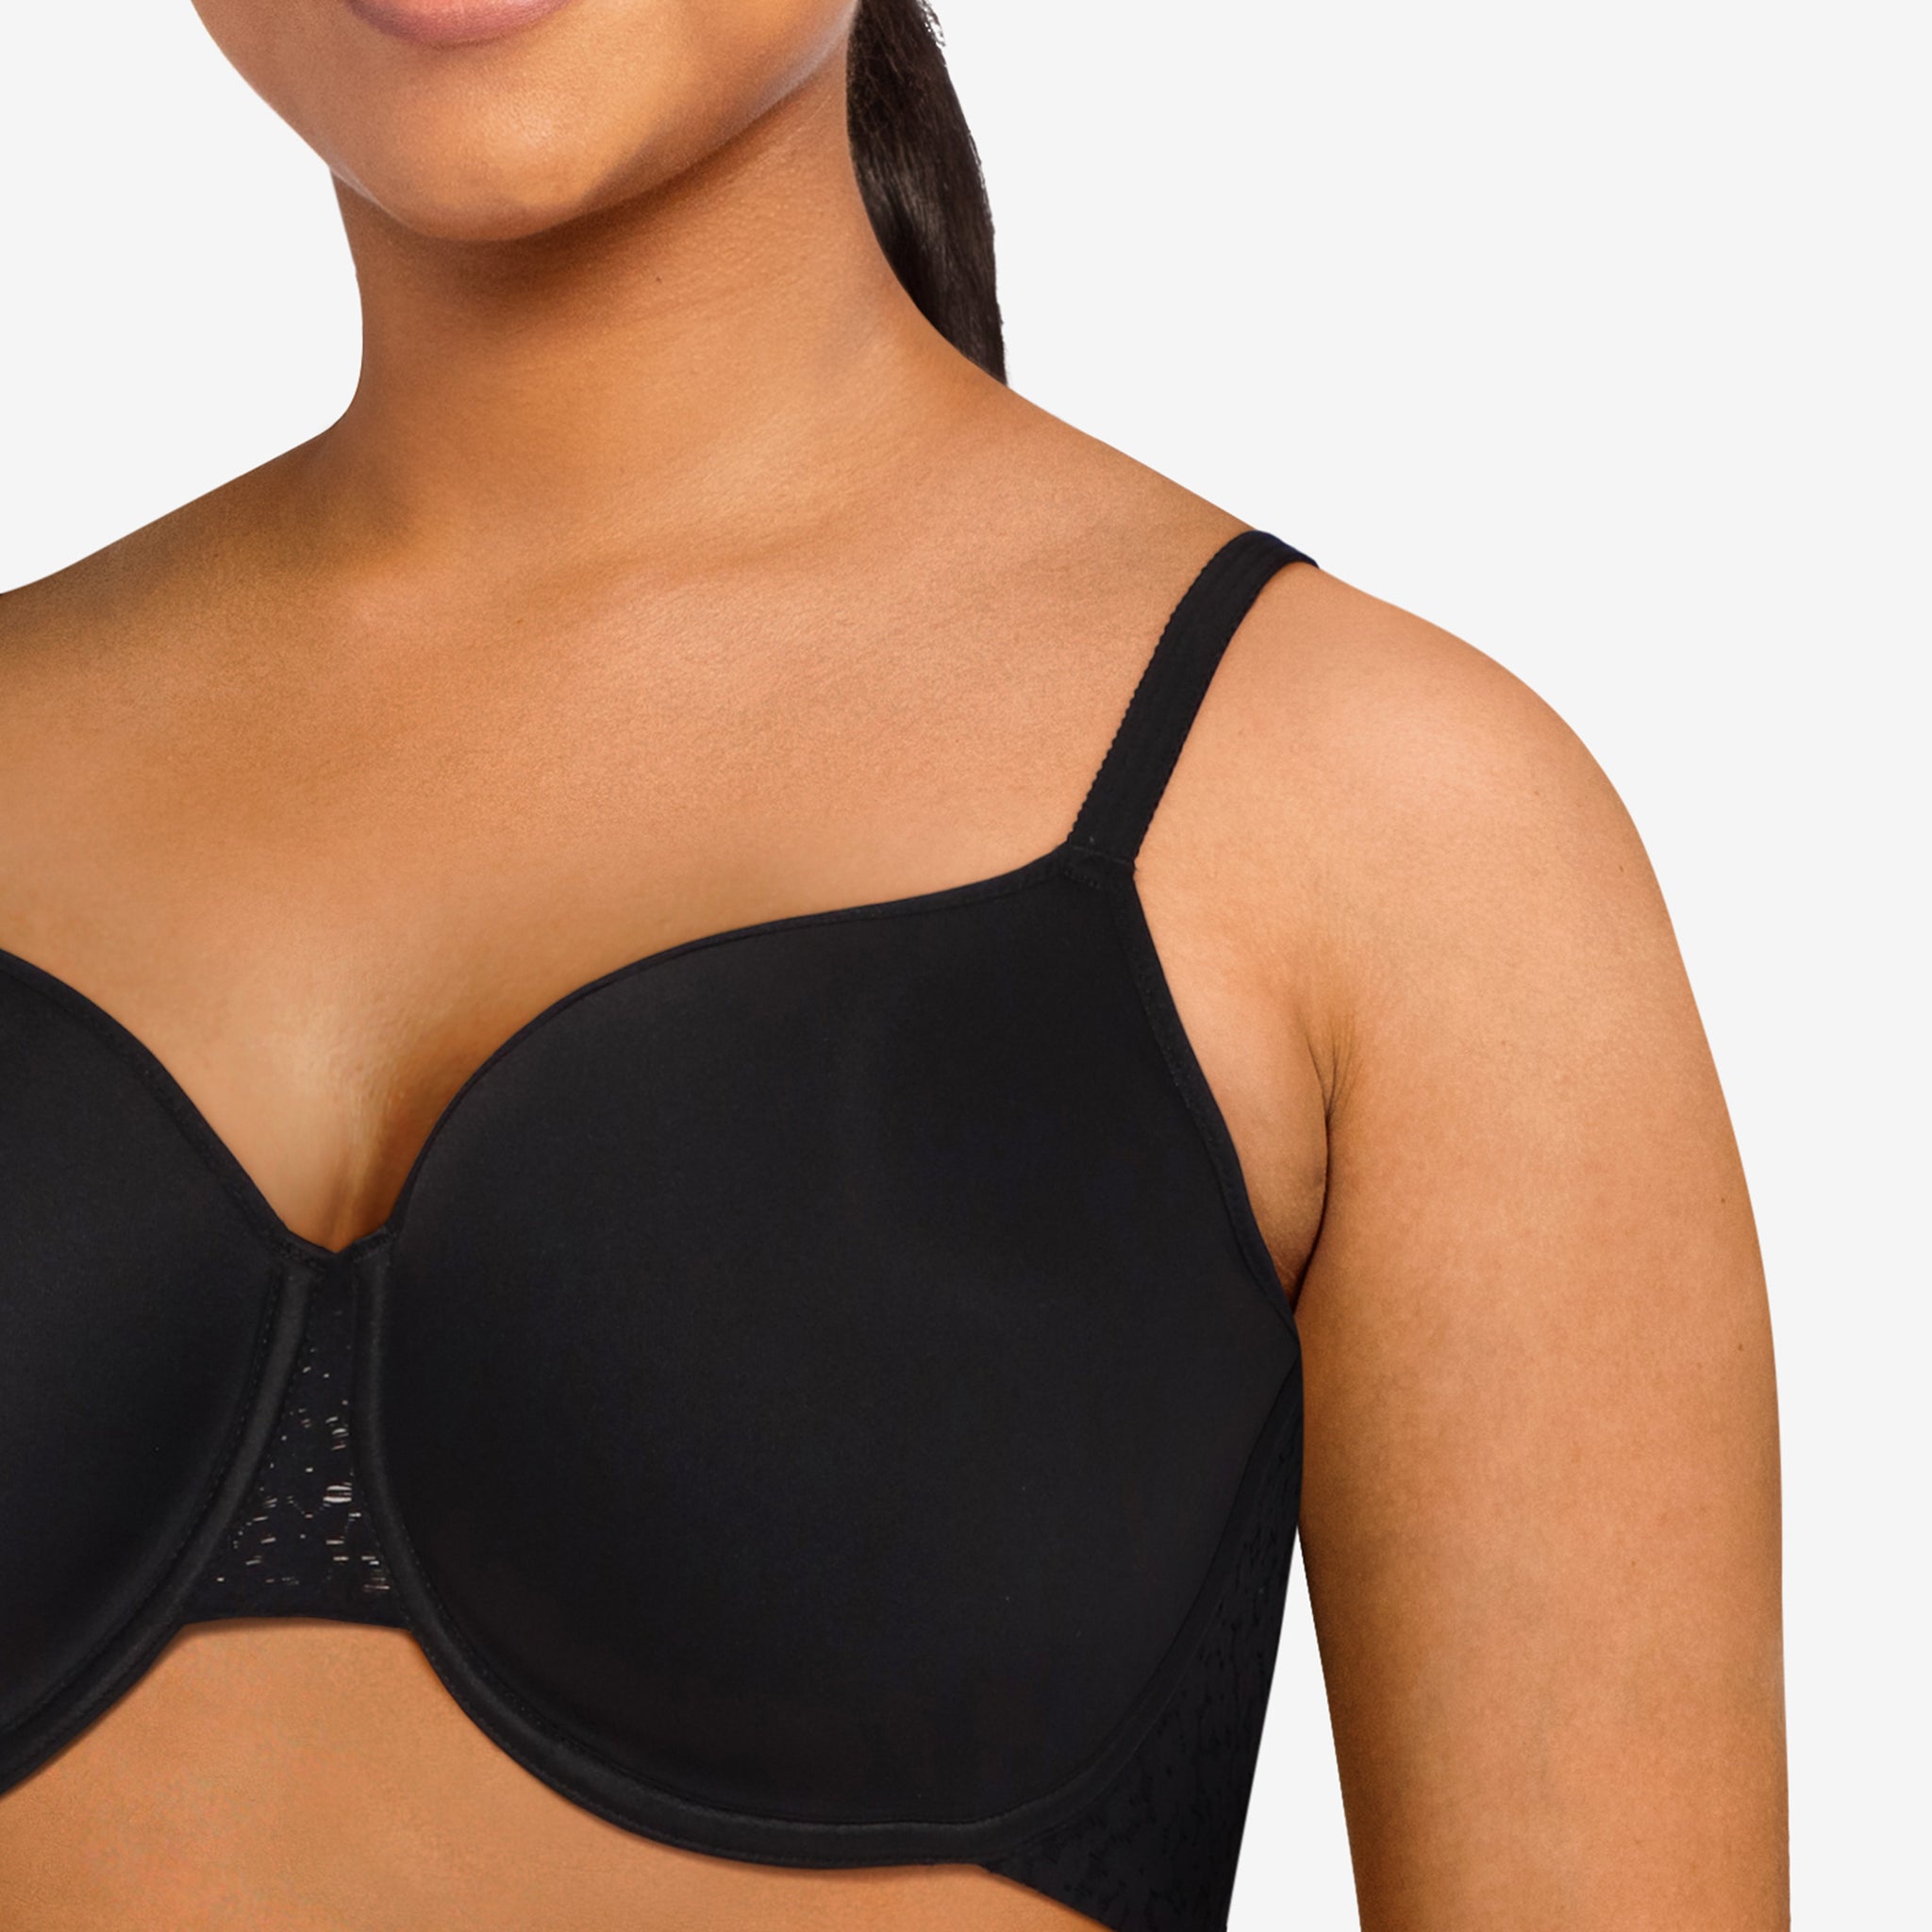 4 36 38 40 C cup big size large size bra Front button plus size bc cup  women's solid color thin bra lingerie